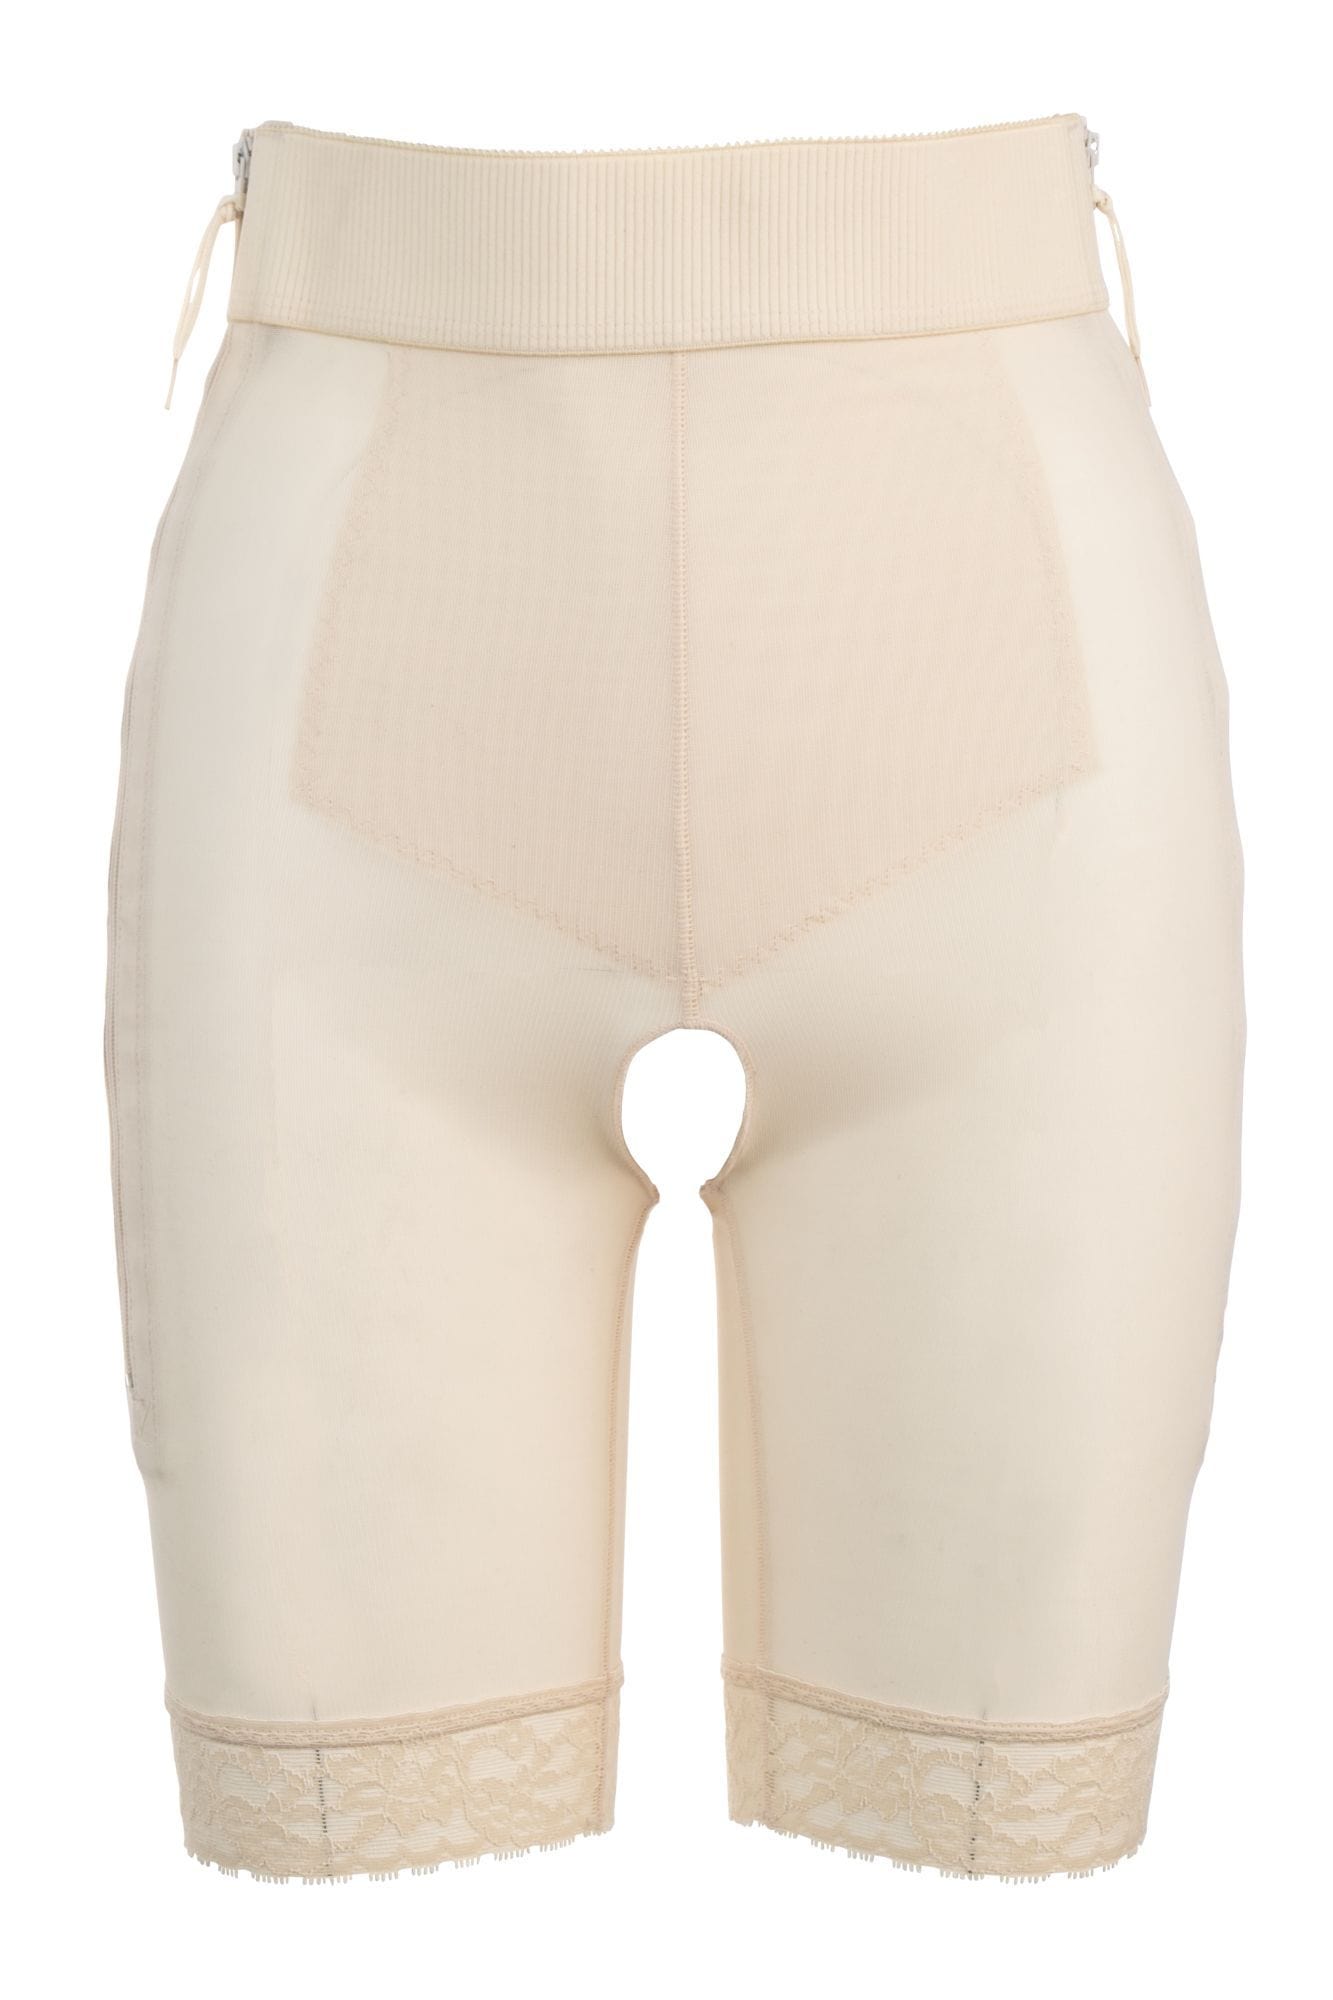 Best of Open crotch panty girdle